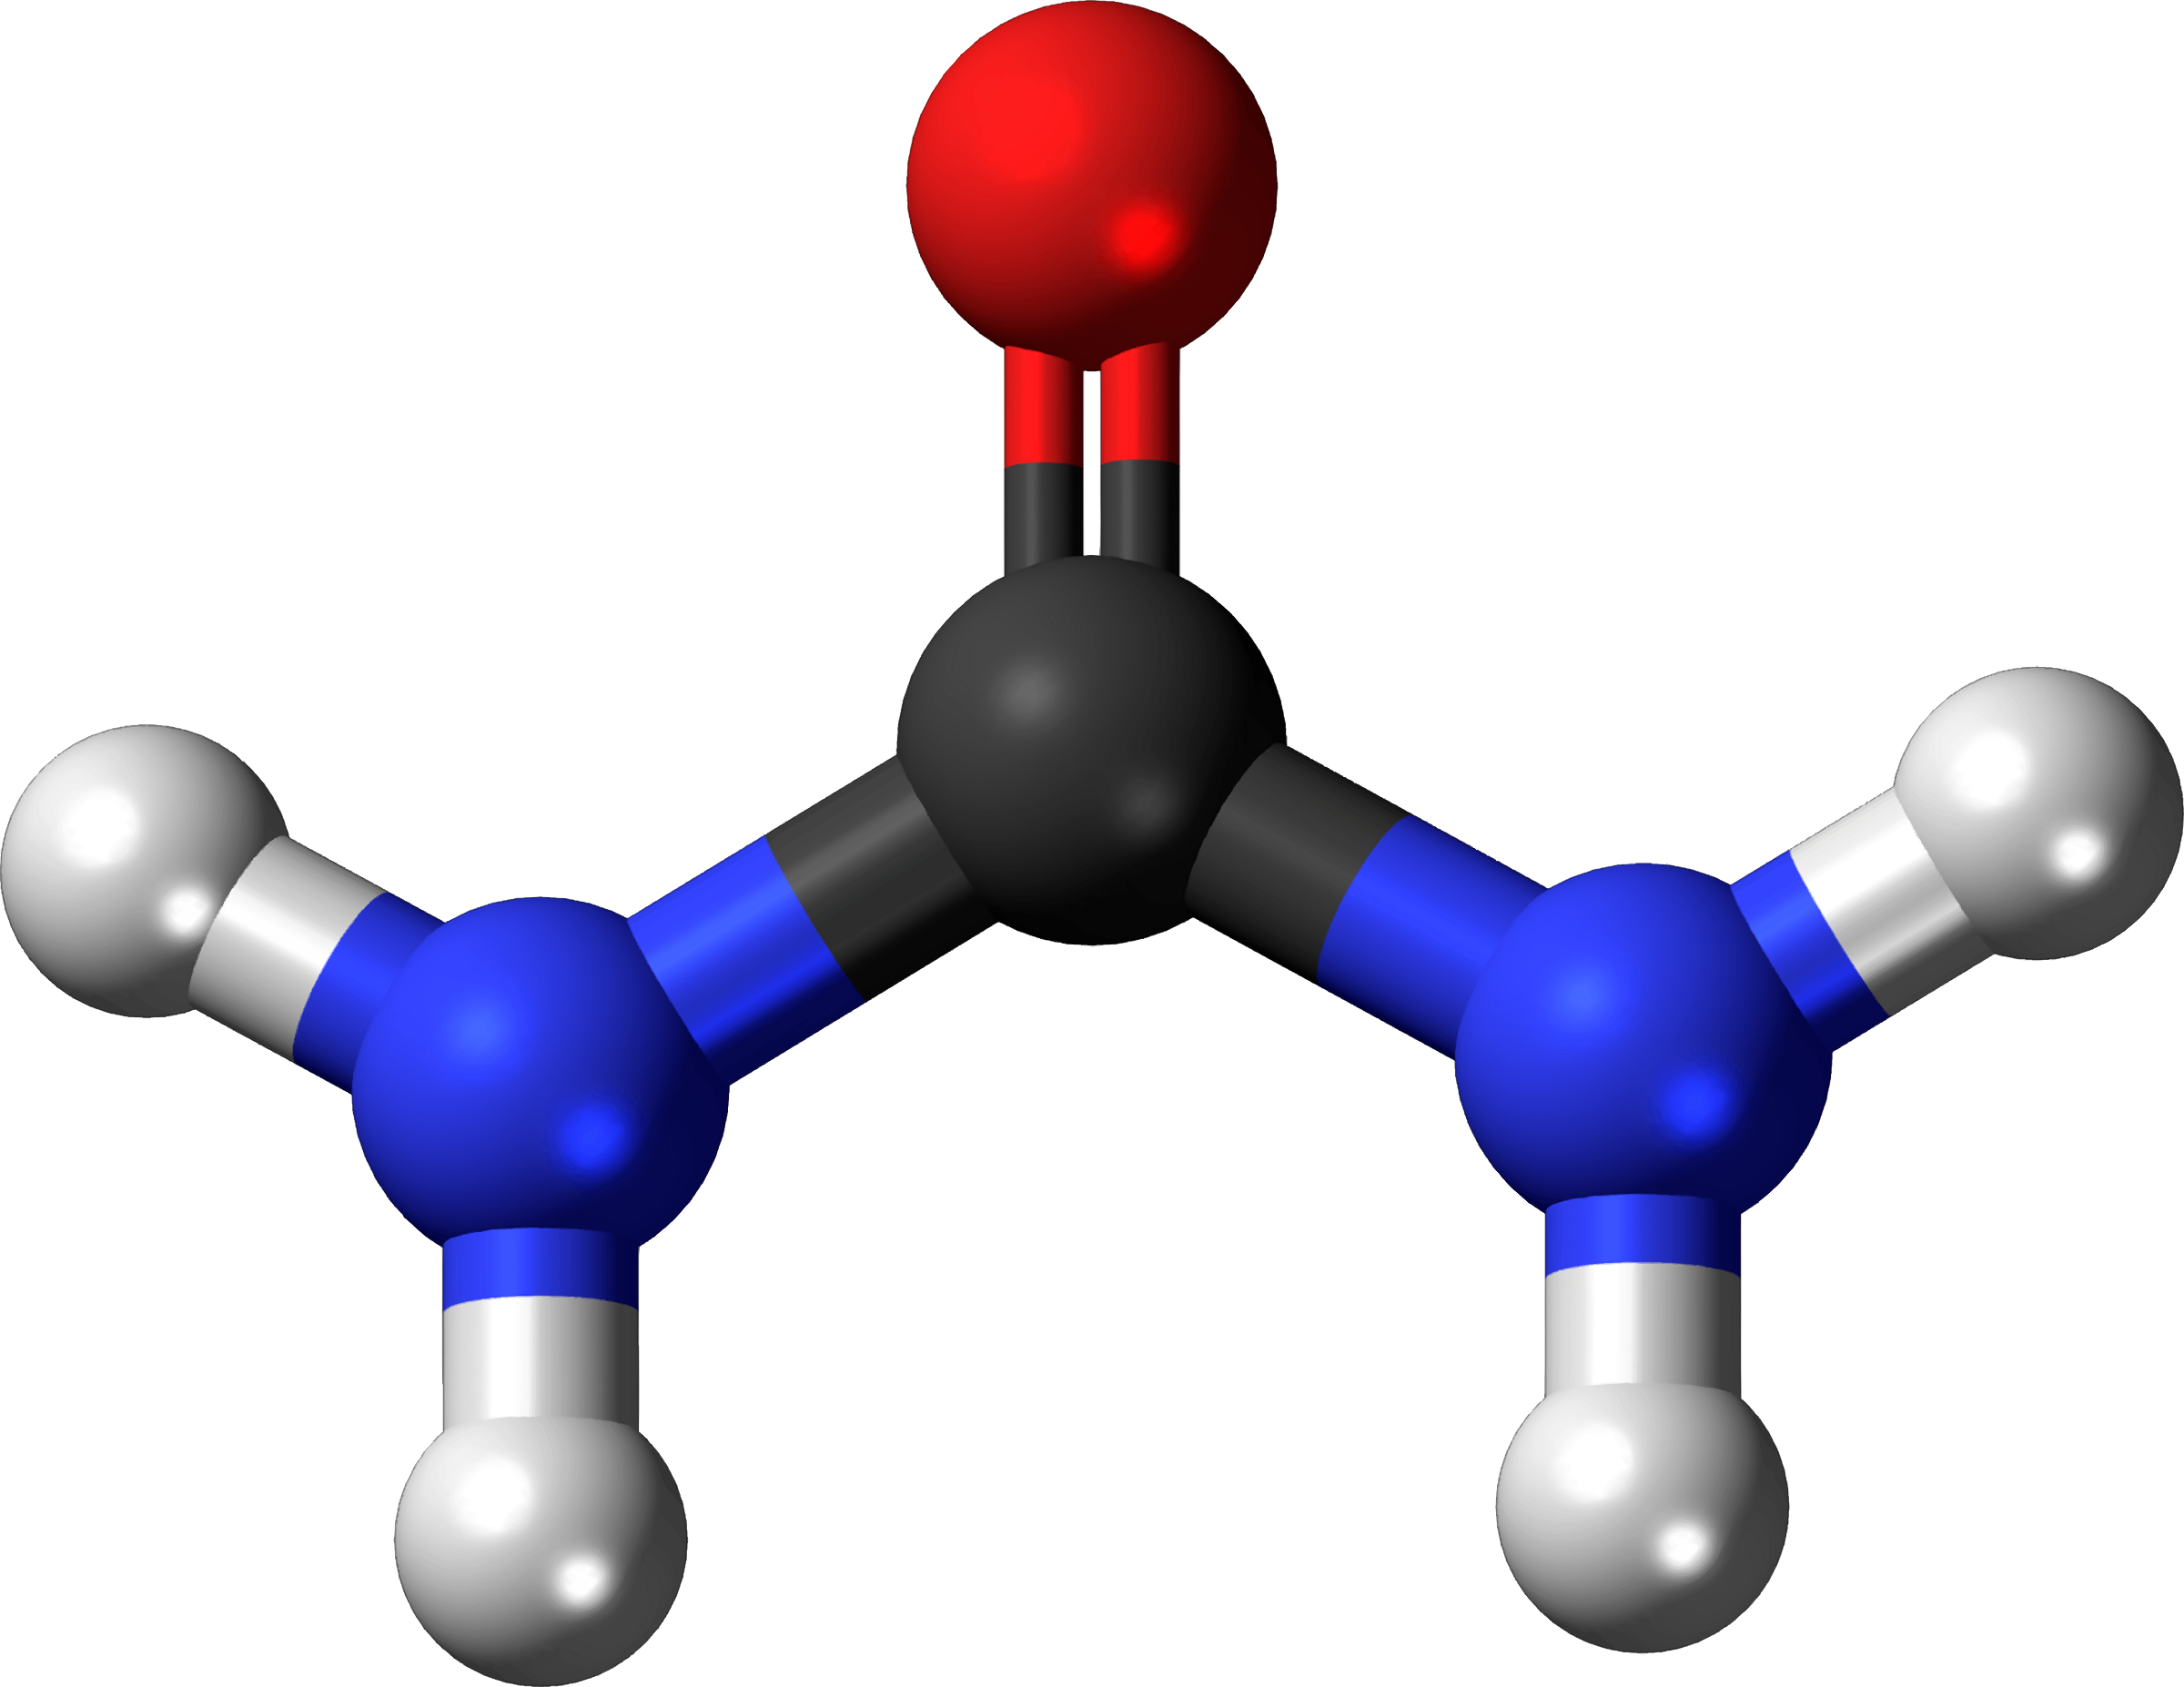 Молекула видна. Молекула мочевины. Мочевина (карбамид), строение молекулы. Молекула карбамида. Молекула аммиака.